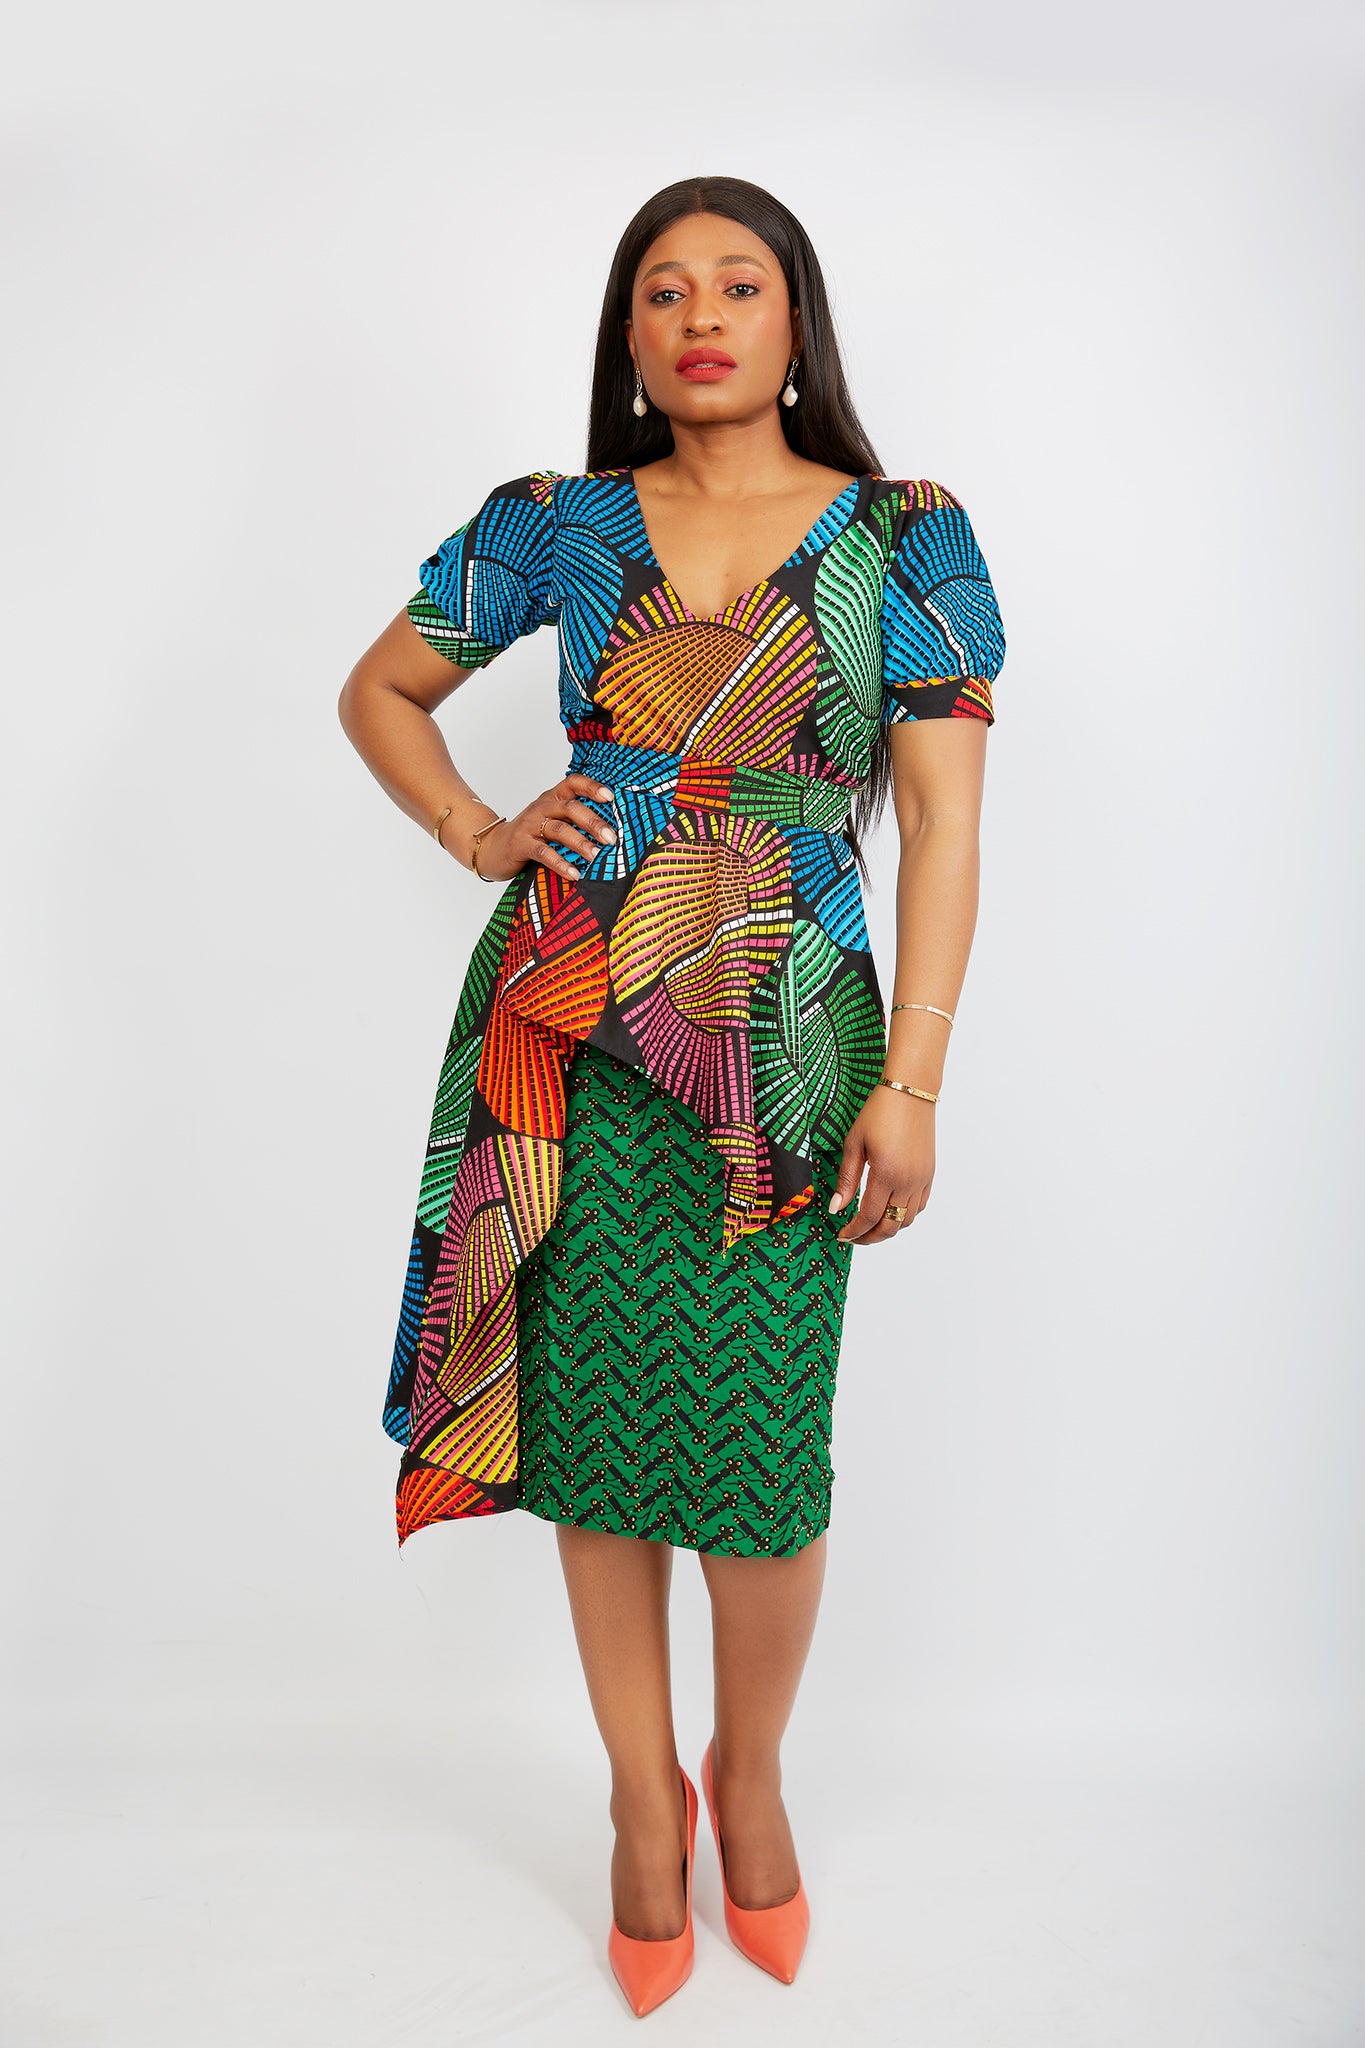 African print top | African Print Blouse | peplum top for women | African clothing for women | African Print blouse for women | African top